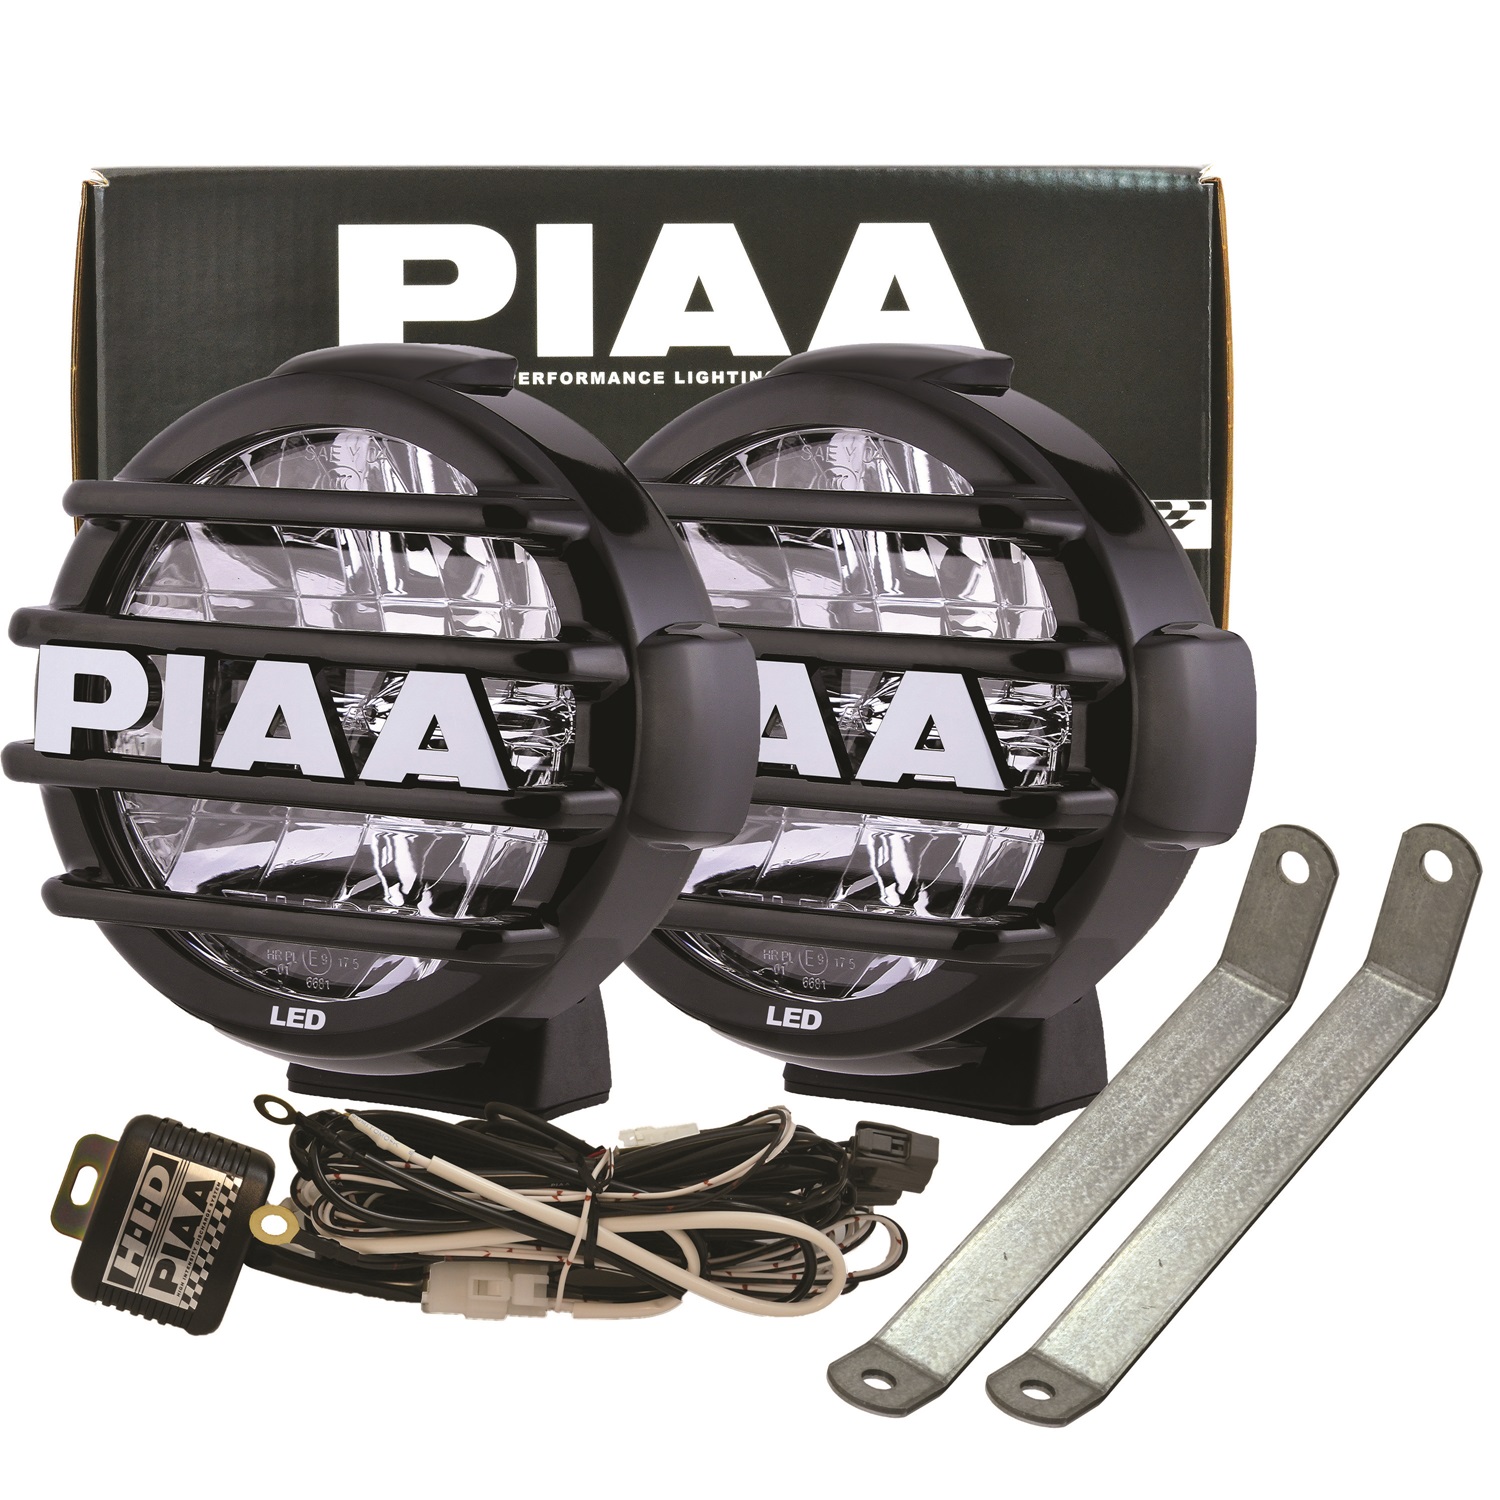 PIAA PIAA 05798 LED Driving Lamp Kit Fits 07-13 FJ Cruiser